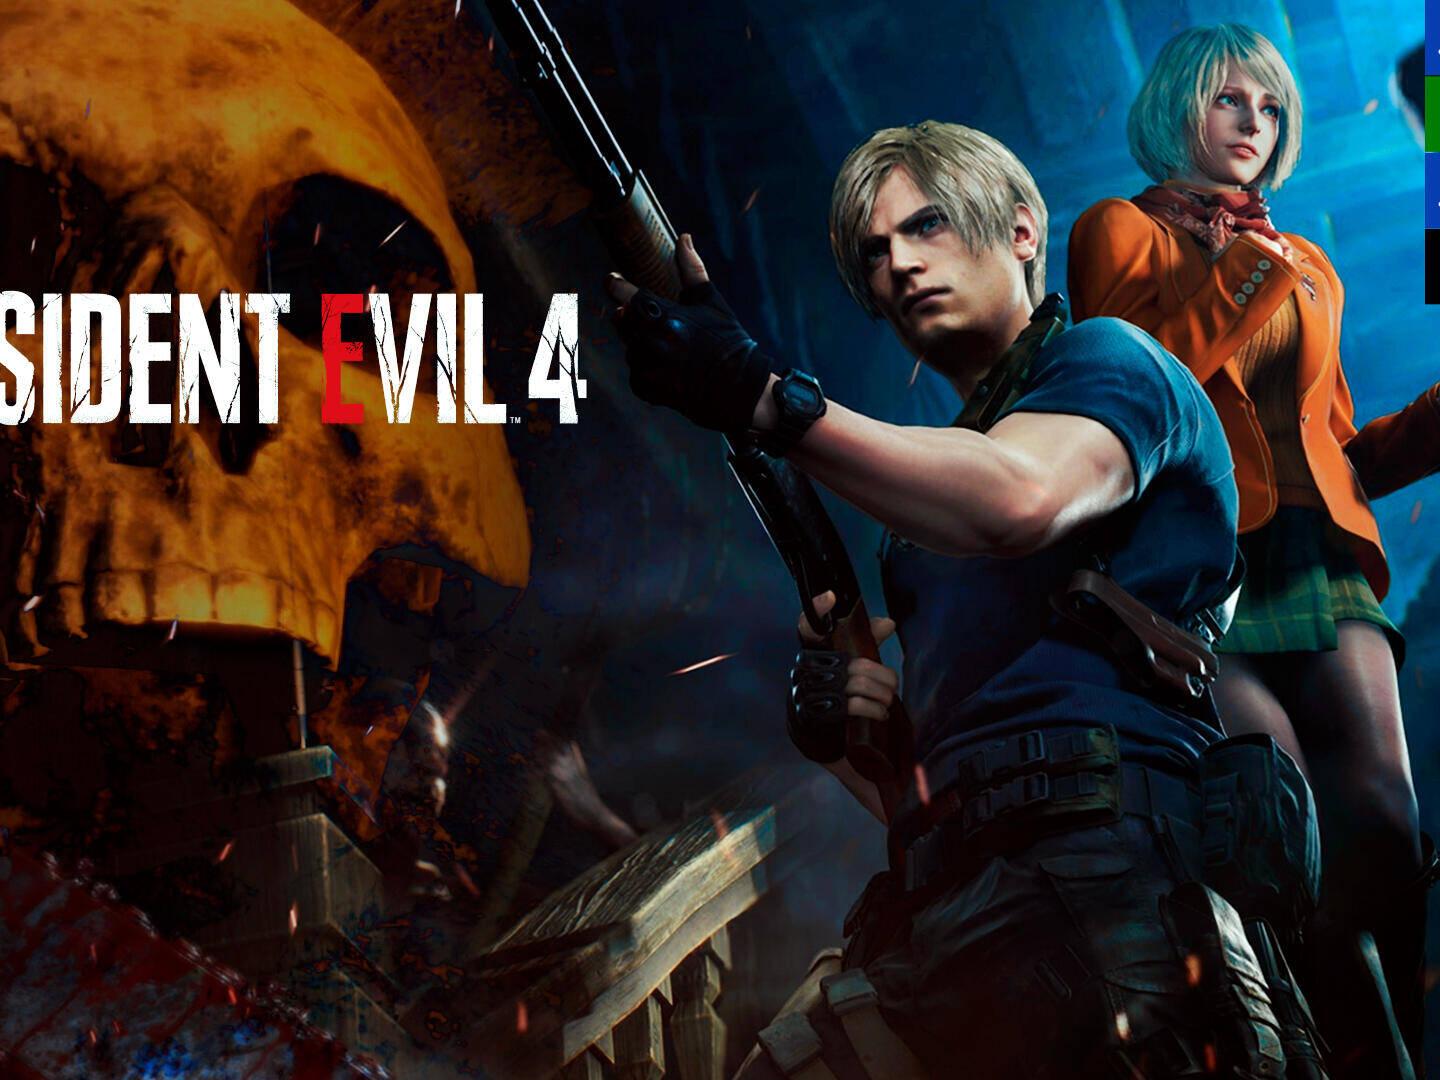 Análisis Resident Evil 5 - PS4, Xbox One